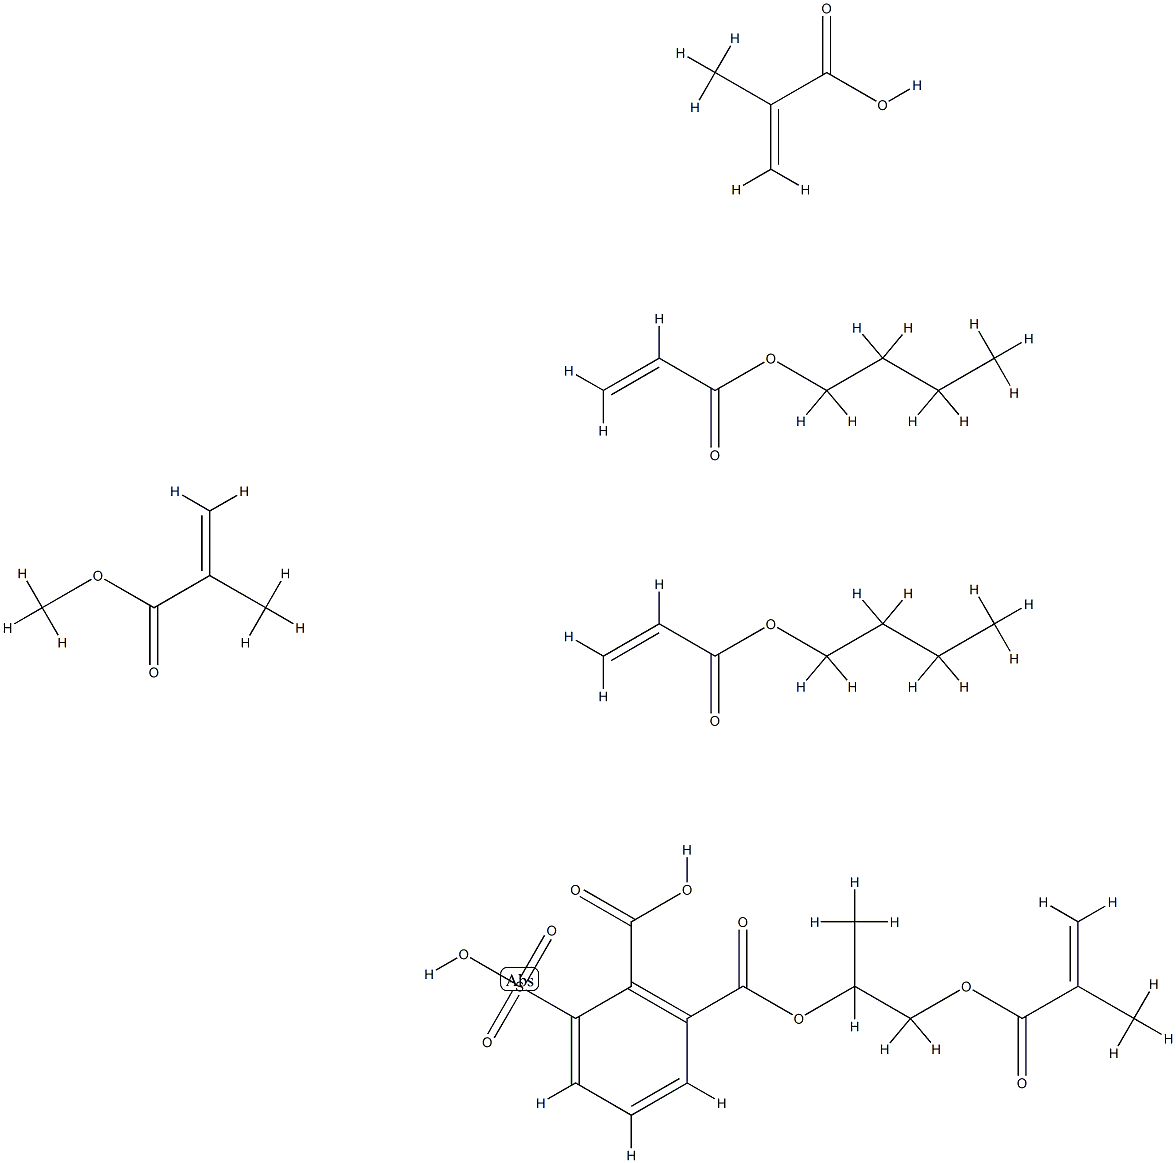 3(or 4)-Sulfo-1,2-benzenedicarboxylic acid, 1-[1-methyl-2-[(2-methyl-1-oxo-2-propenyl)oxy]ethyl]ester polymer with butyl 2-methyl-2-propenoate, butyl 2-propenoate, methyl 2-methyl-2-propenoate and 2-methyl-2-propenoic acid|